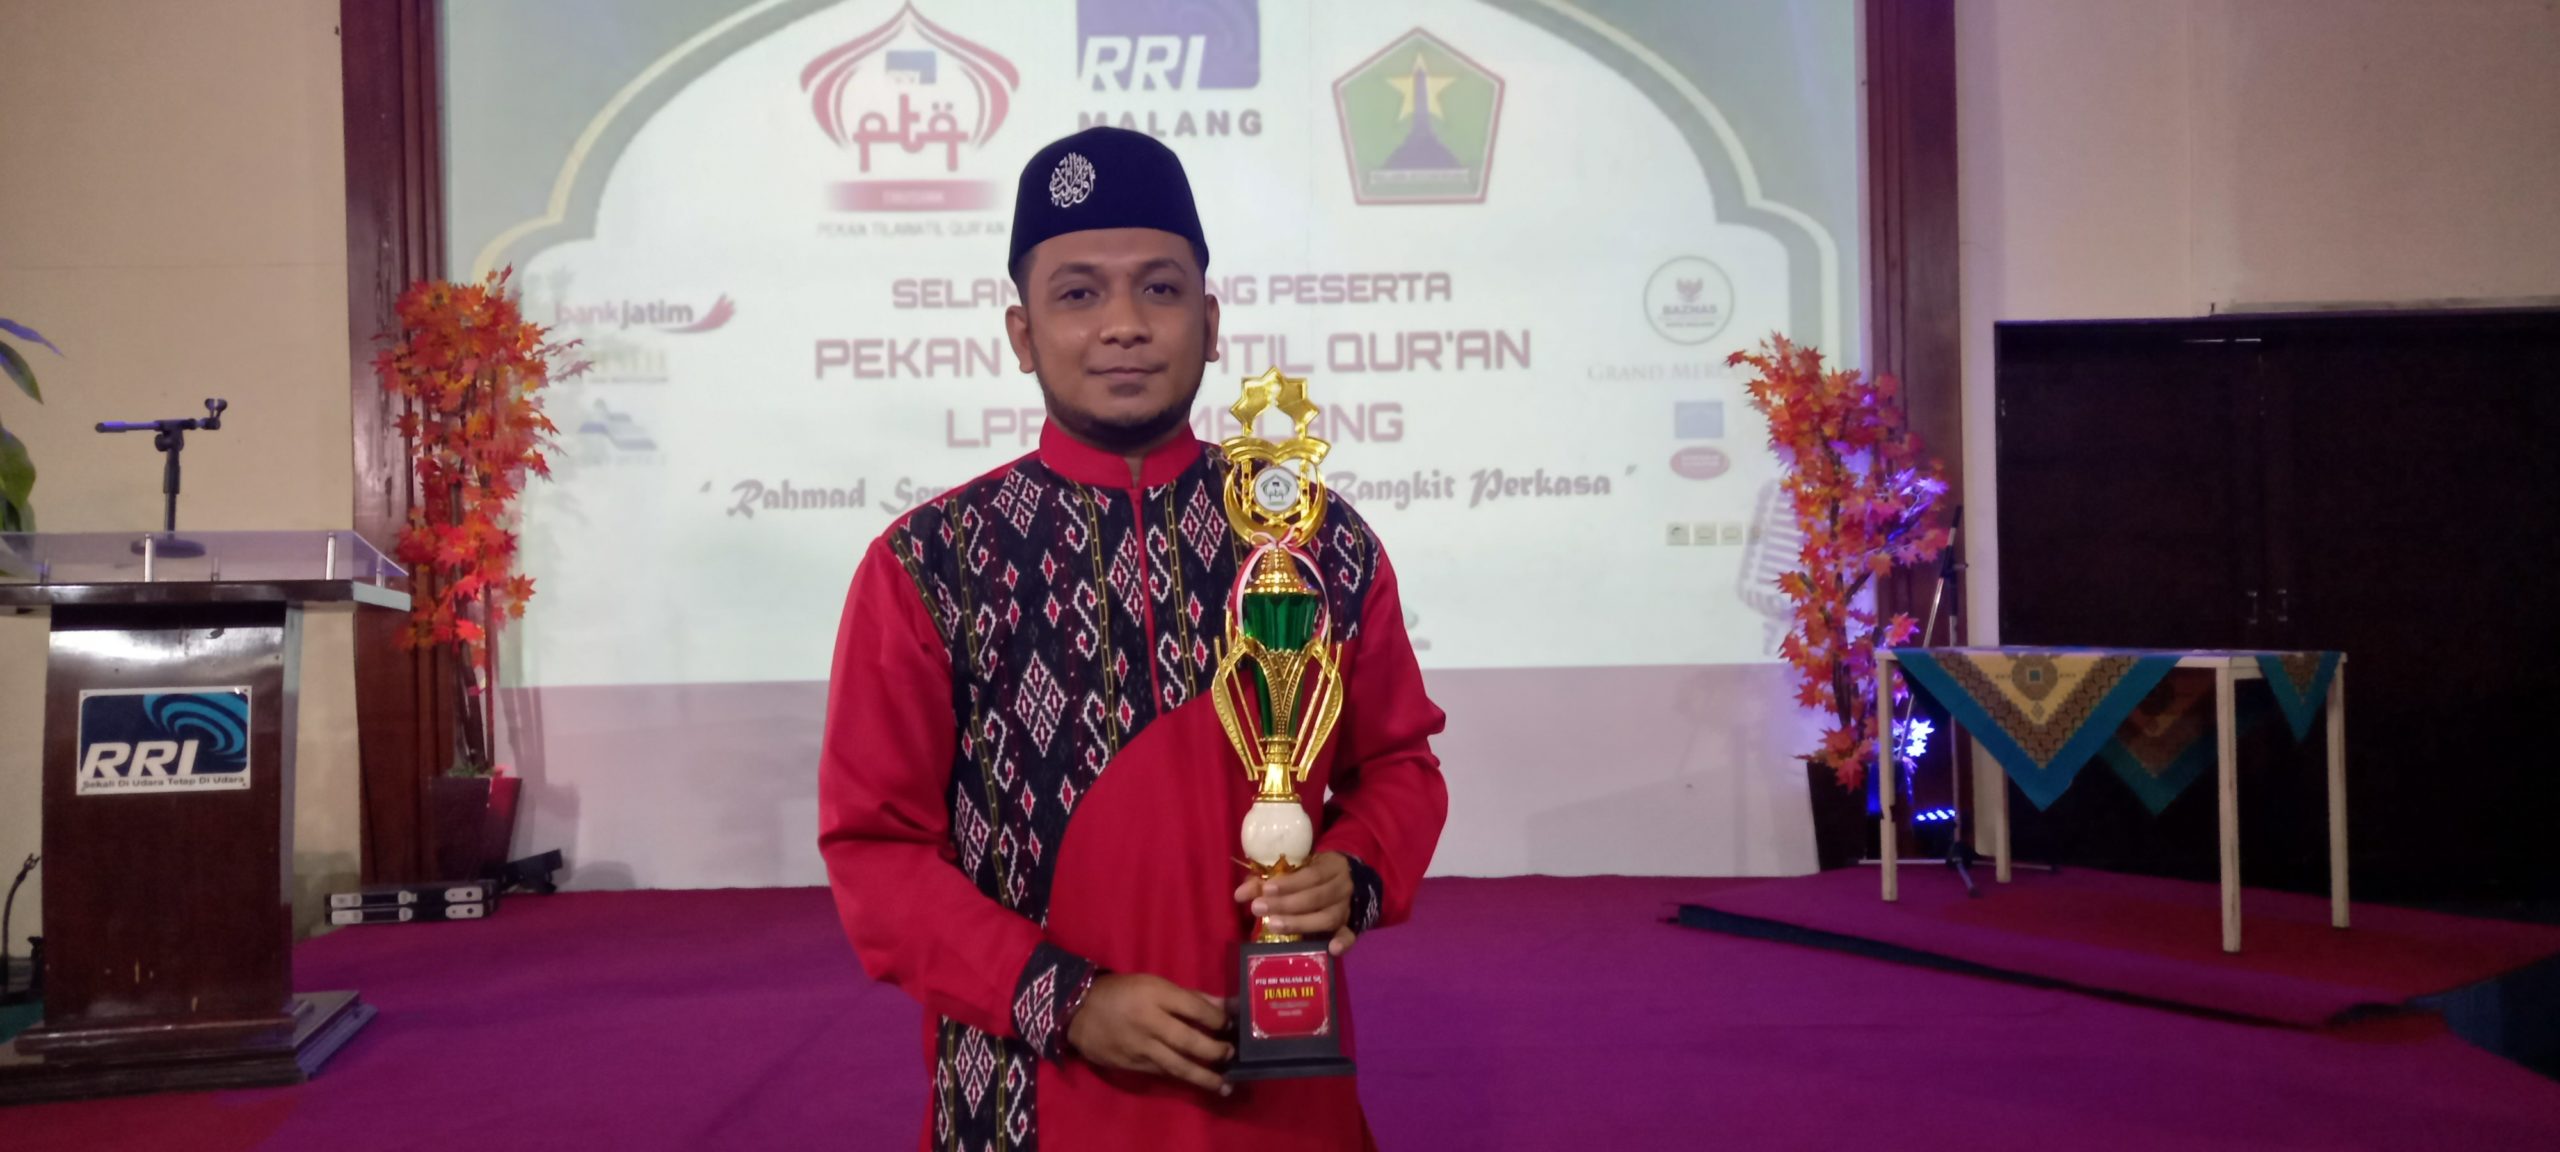 Himpunan Mahasiswa Muslim Pascasarjana (HIMMPAS) Ulul Albab UIN Maulana Malik Ibrahim Malang meraih juara 3 Tilawah PTQ LPP RRI Malang